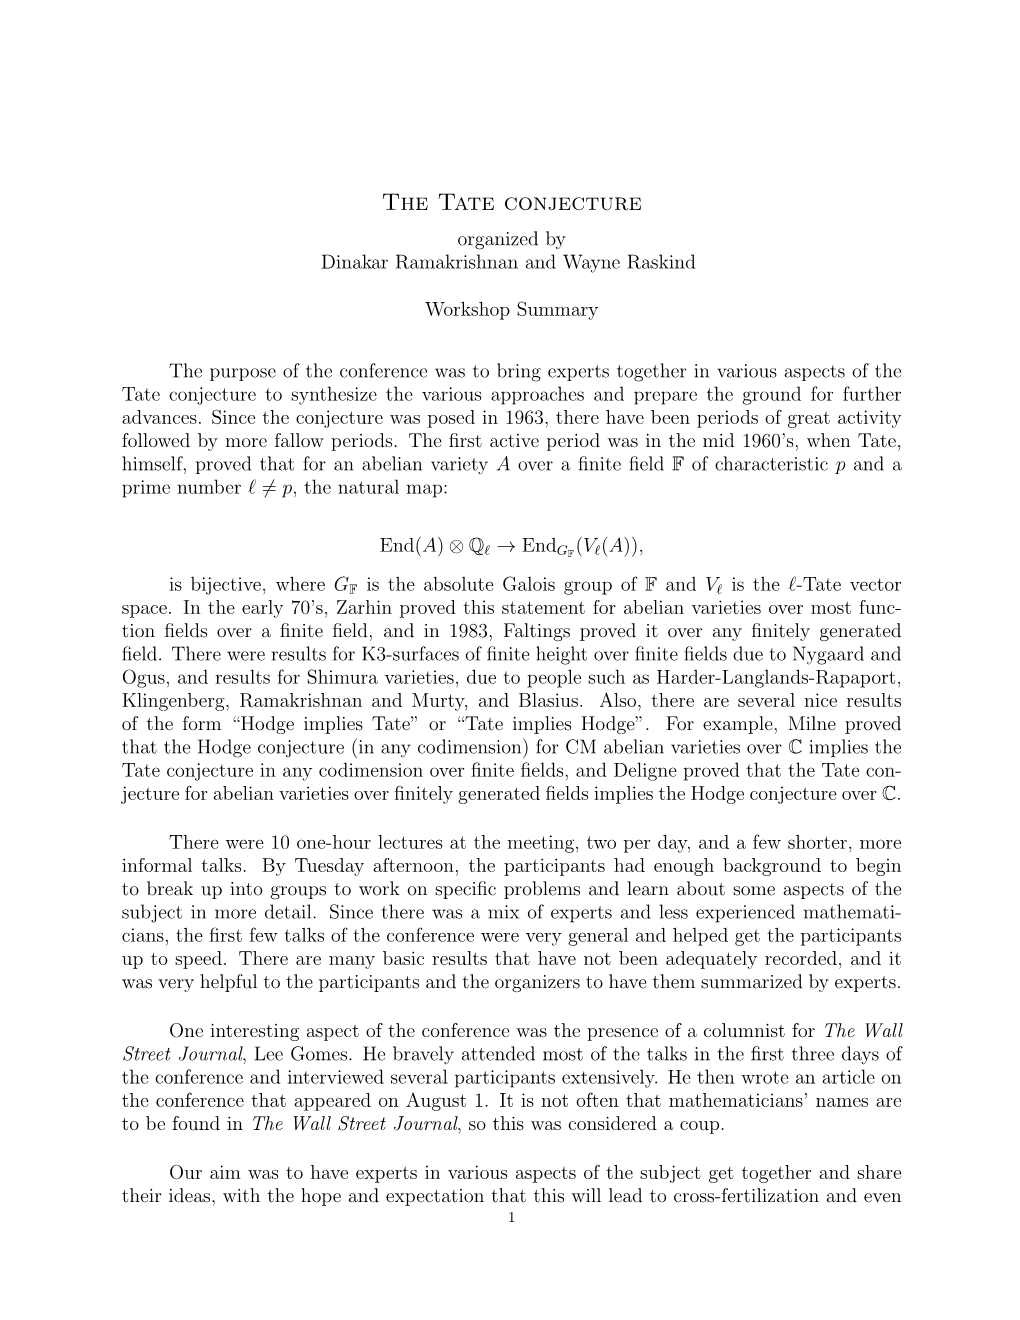 The Tate Conjecture Organized by Dinakar Ramakrishnan and Wayne Raskind